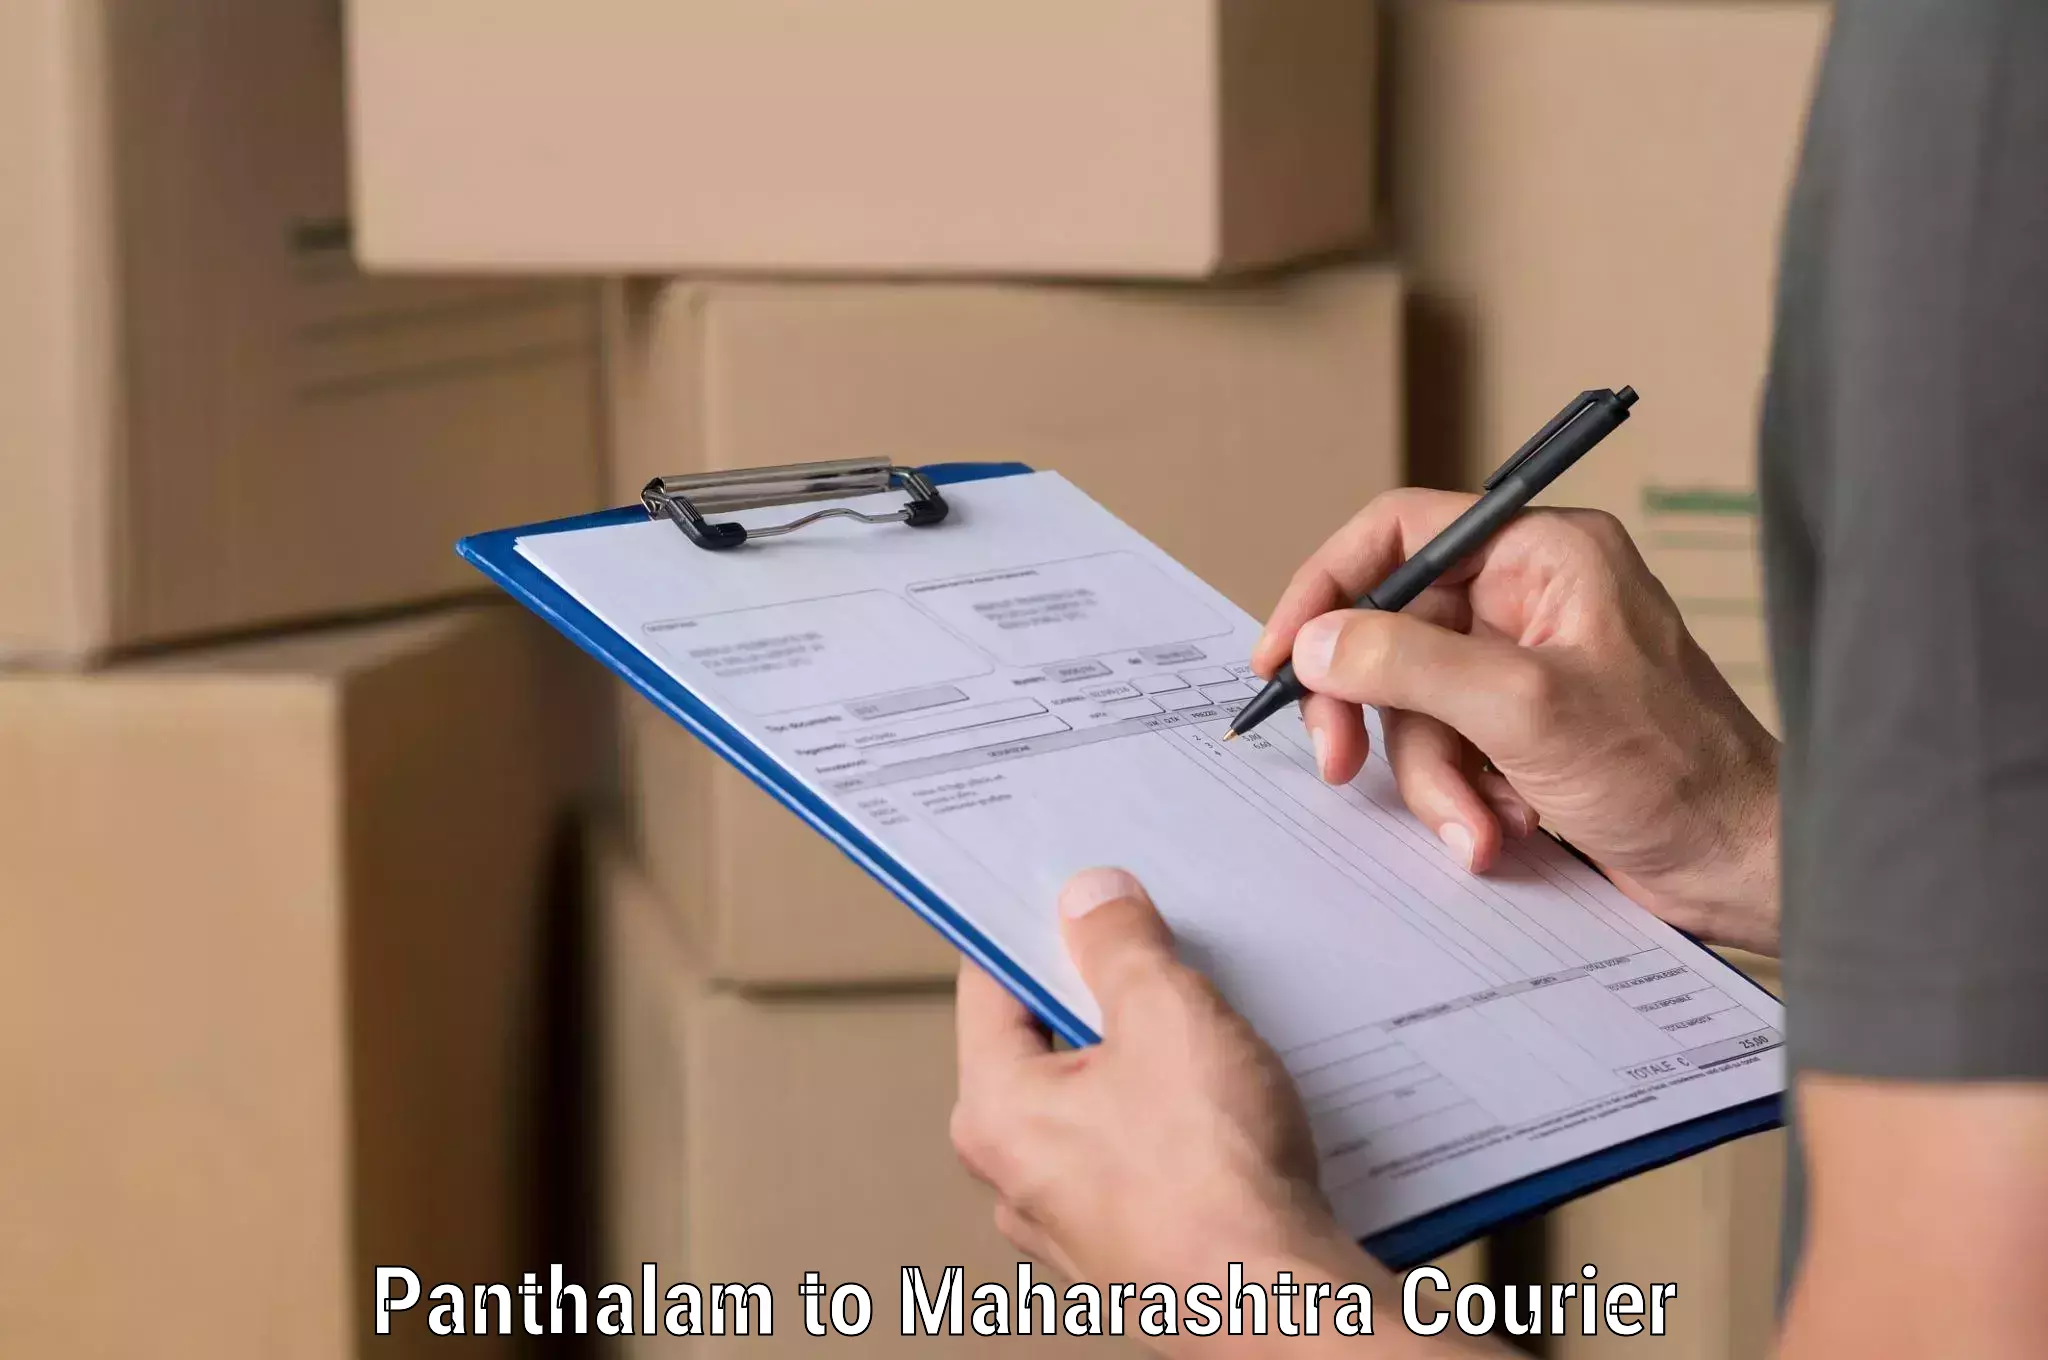 Smart shipping technology Panthalam to Maharashtra